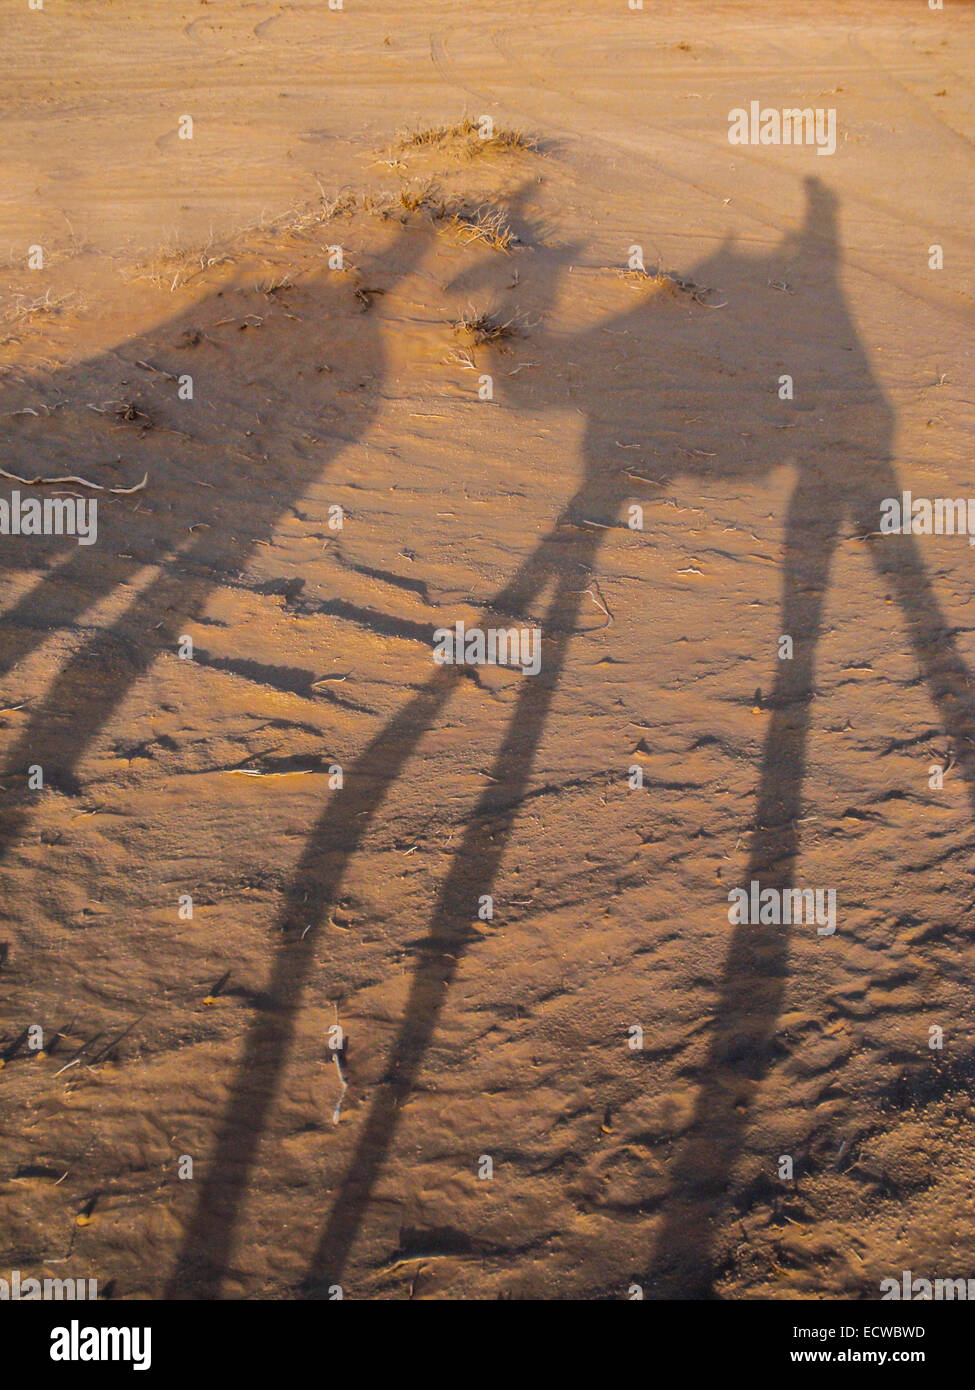 Shadows of tourists on camelback at sunset against the sand, Abu Dhabi, UAE Stock Photo